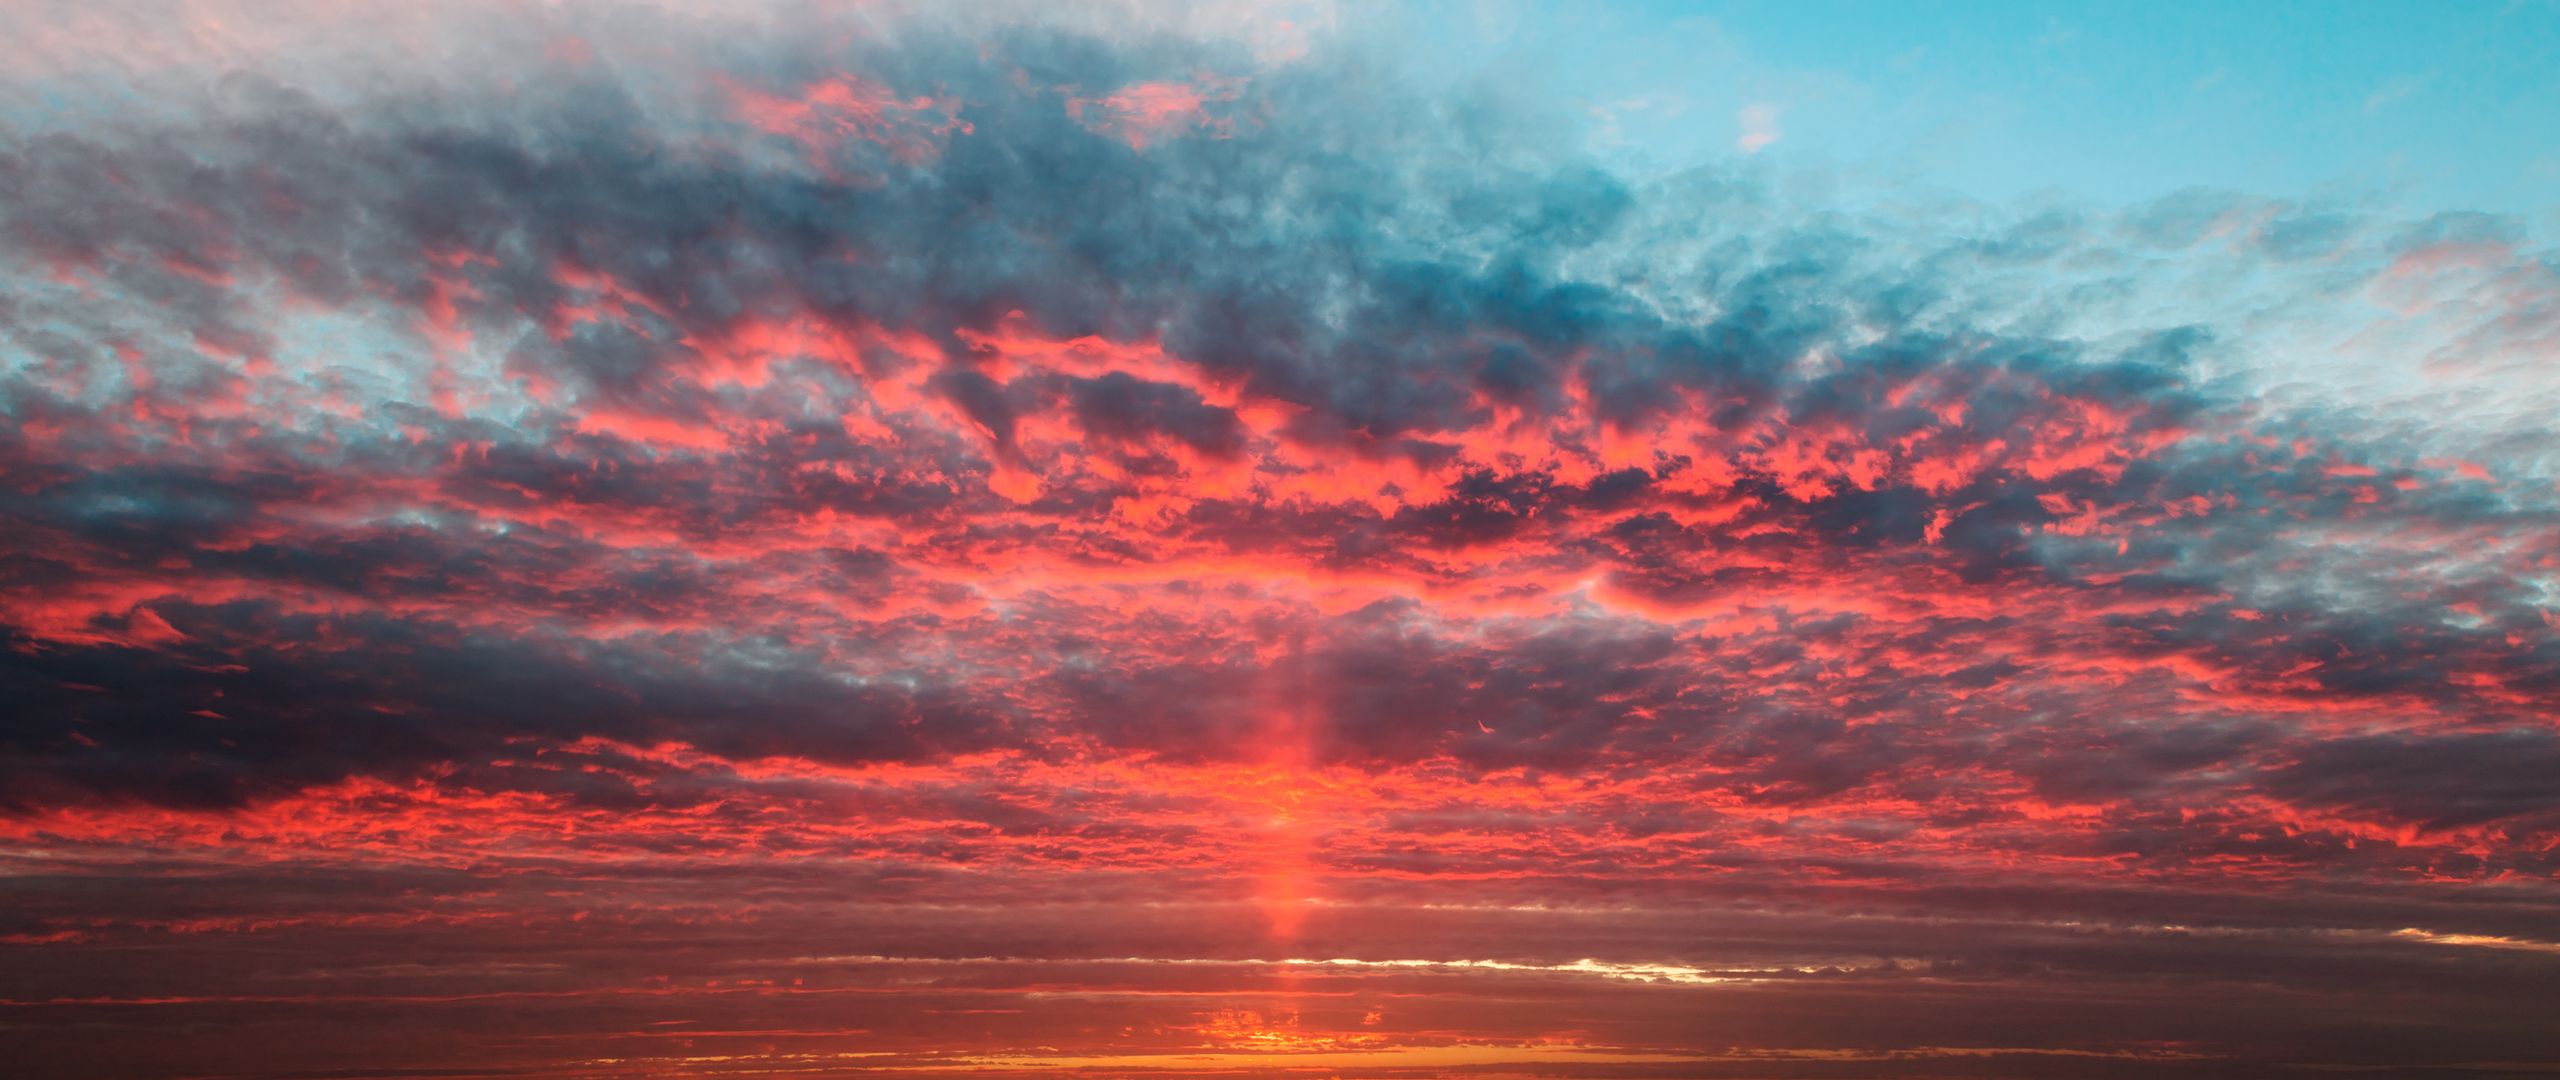 Download wallpaper 2560x1080 twilight, horizon, clouds, sky dual wide 1080p HD background